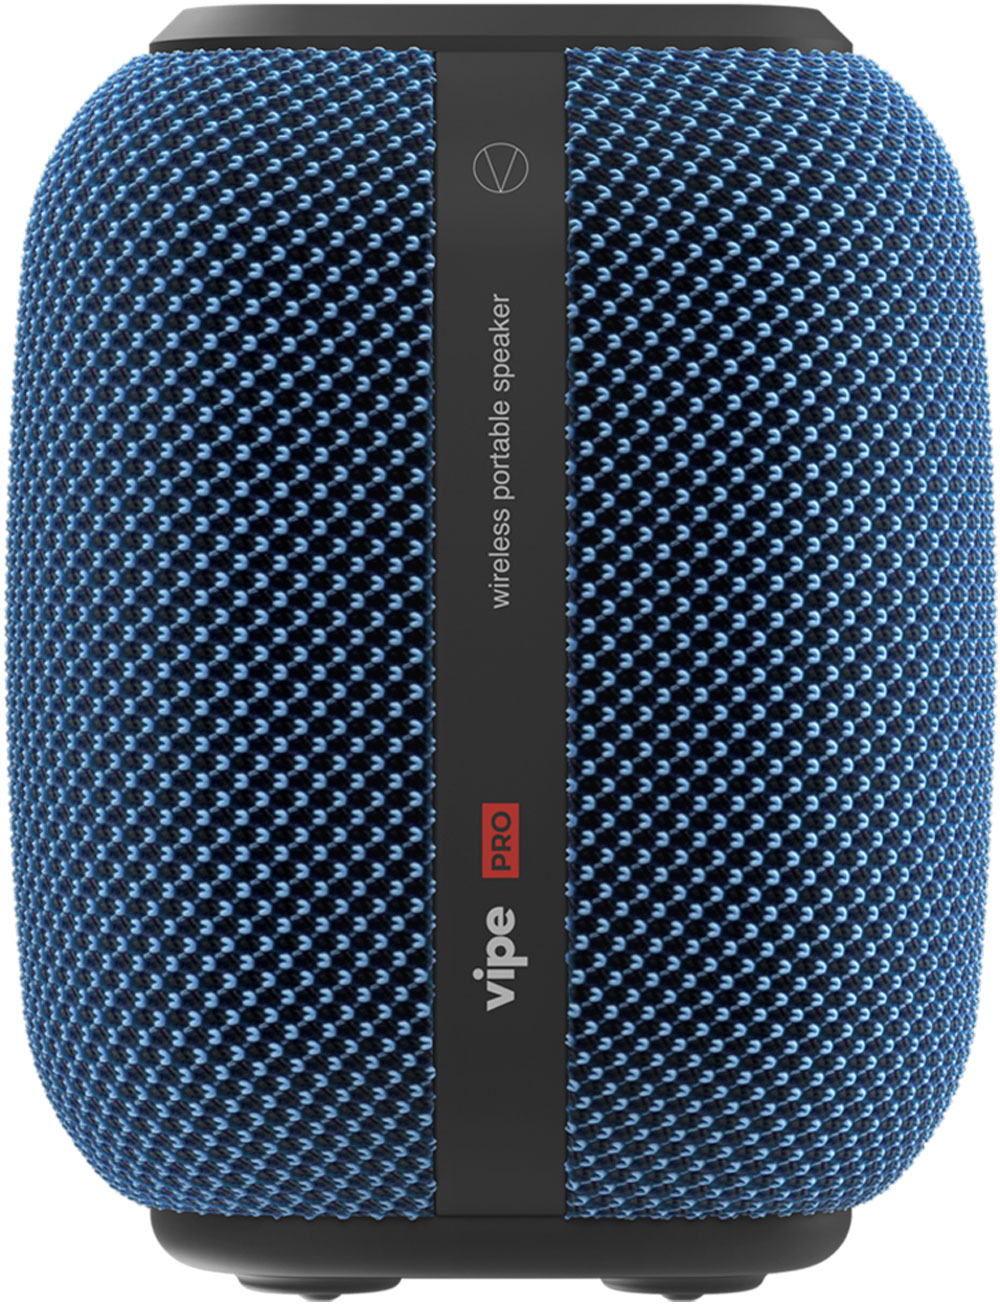 Портативная акустическая система Vipe SX9 Pro Синяя 0406-1826 - фото 4